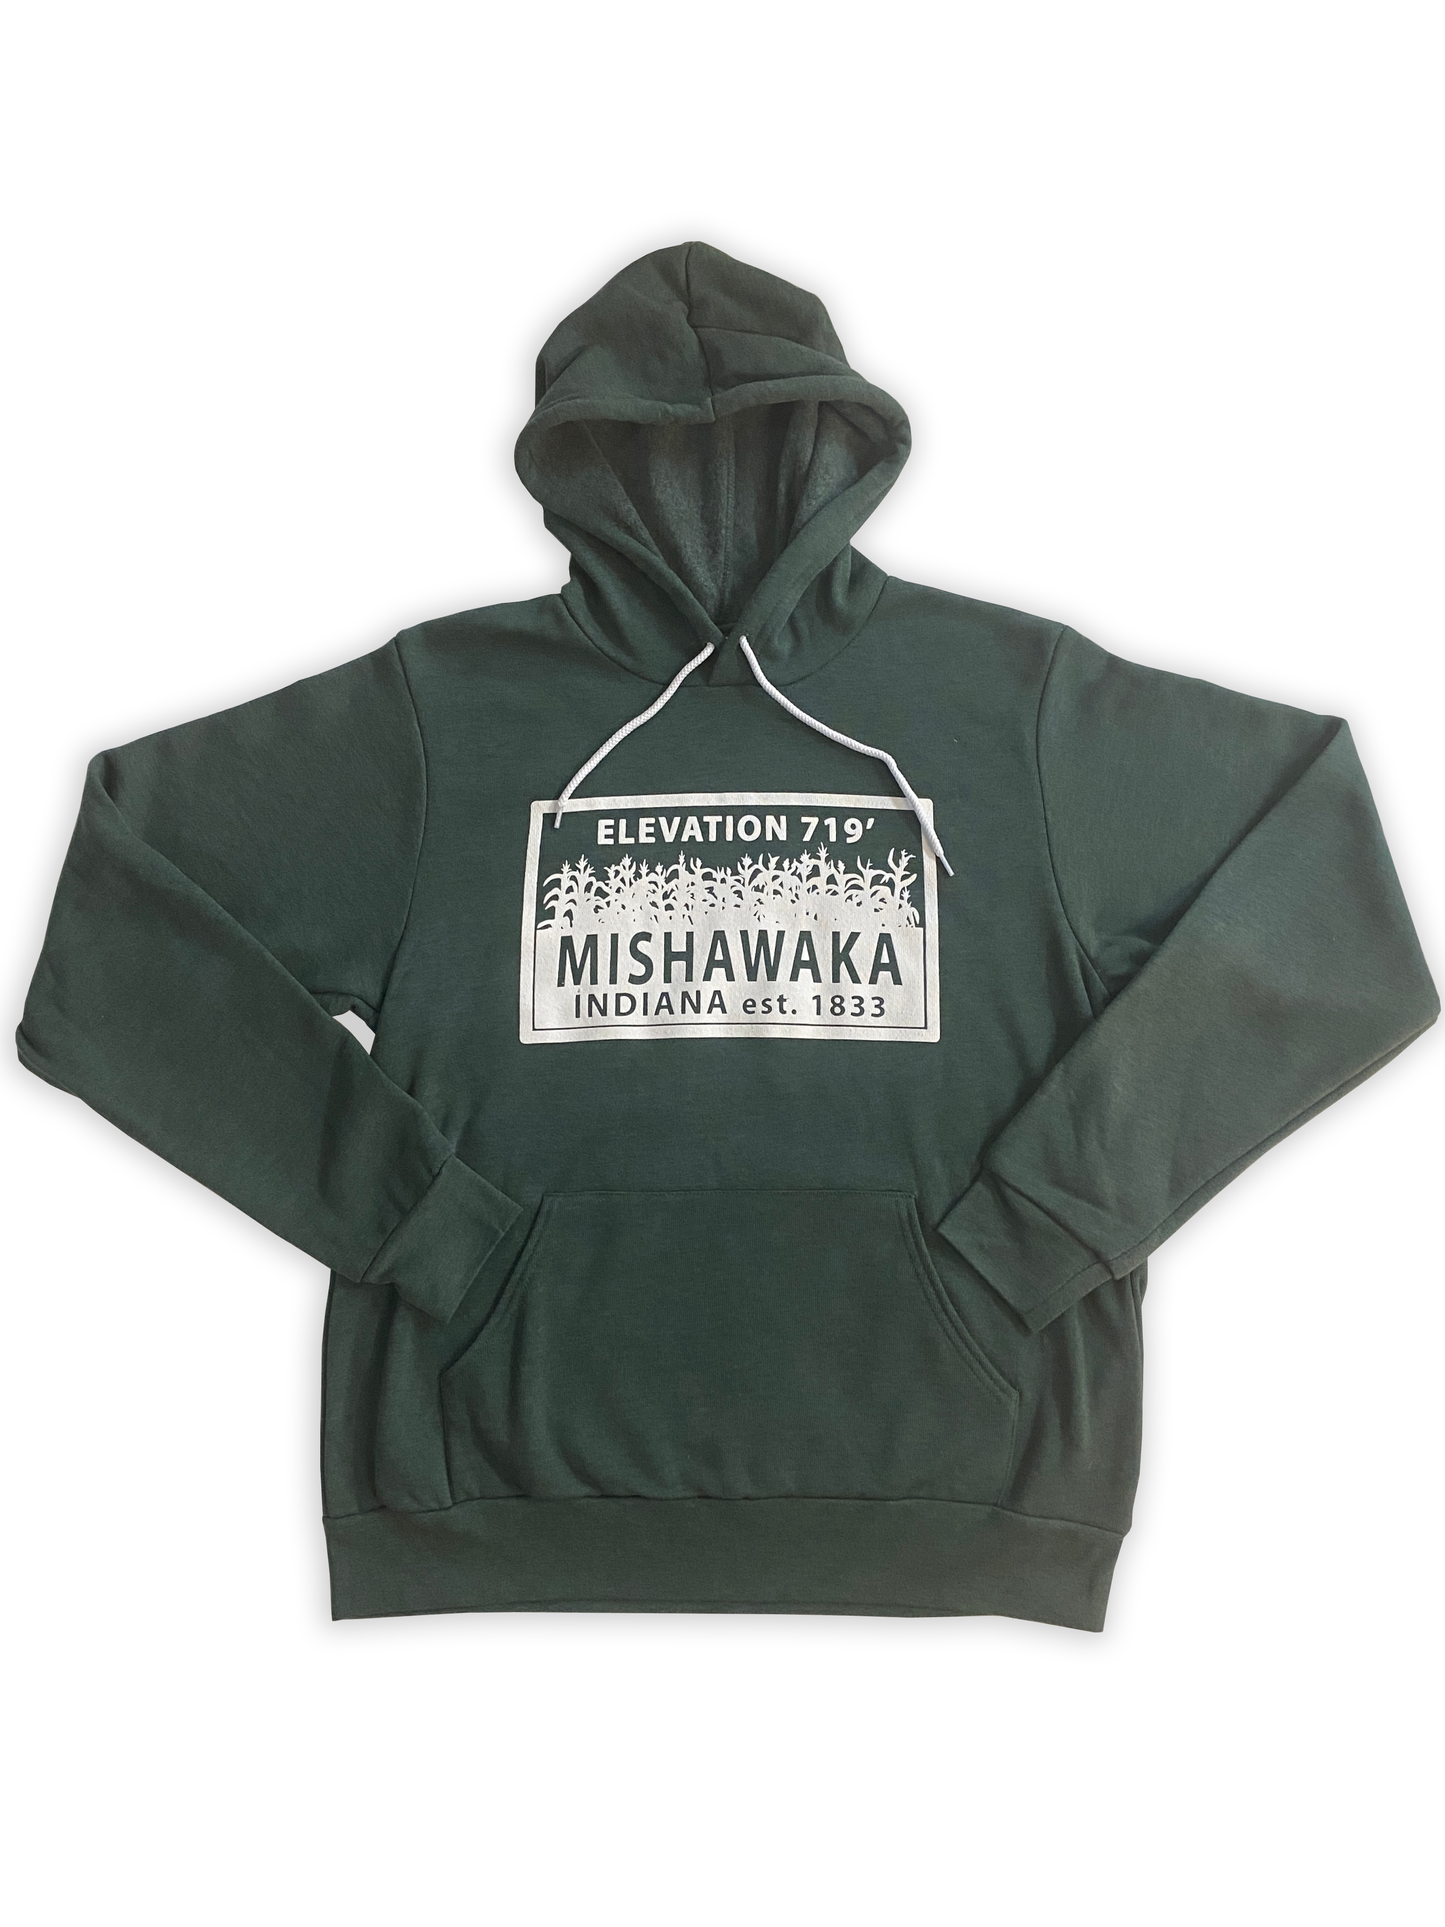 Mishawaka Indiana elevation hoody